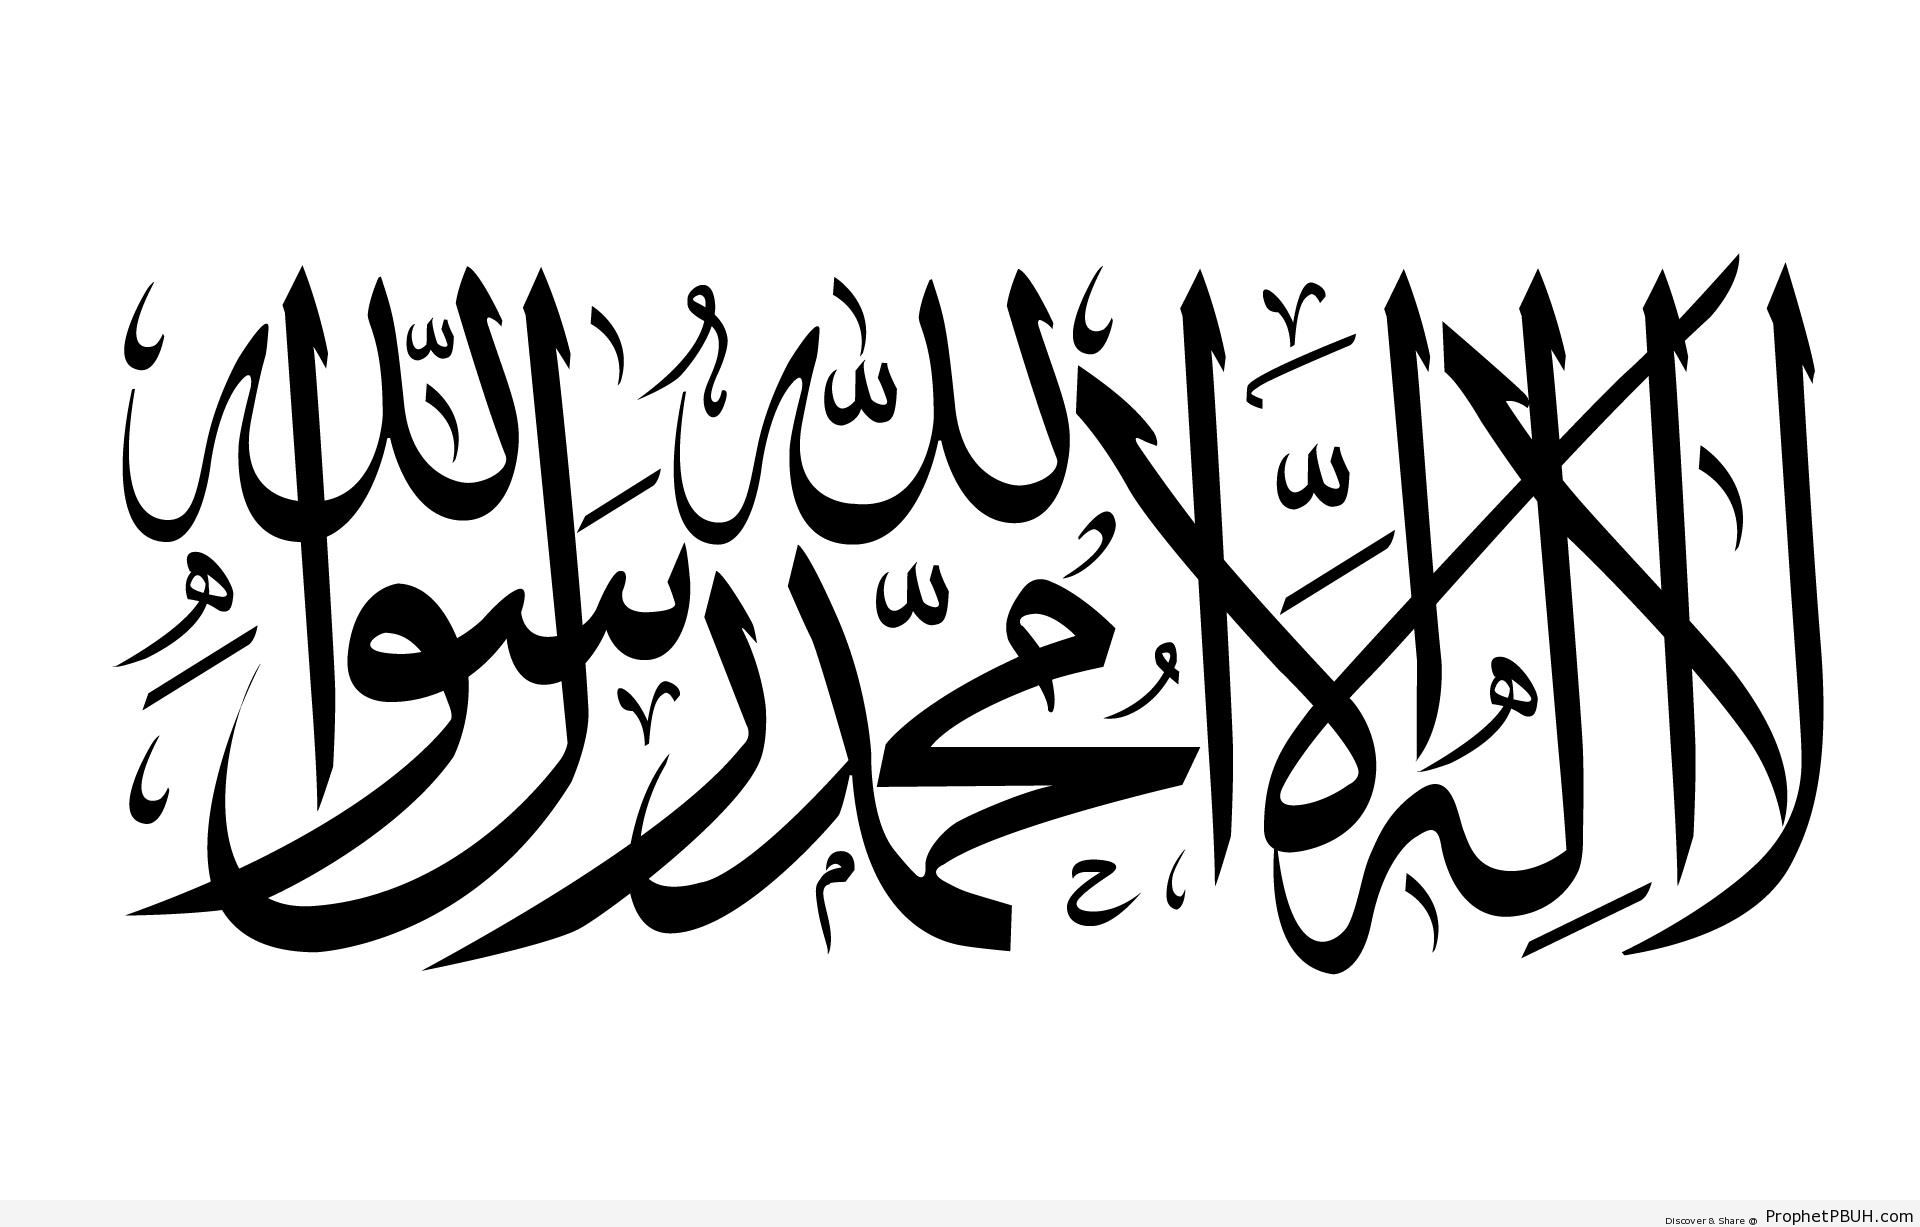 mashallah logo hd